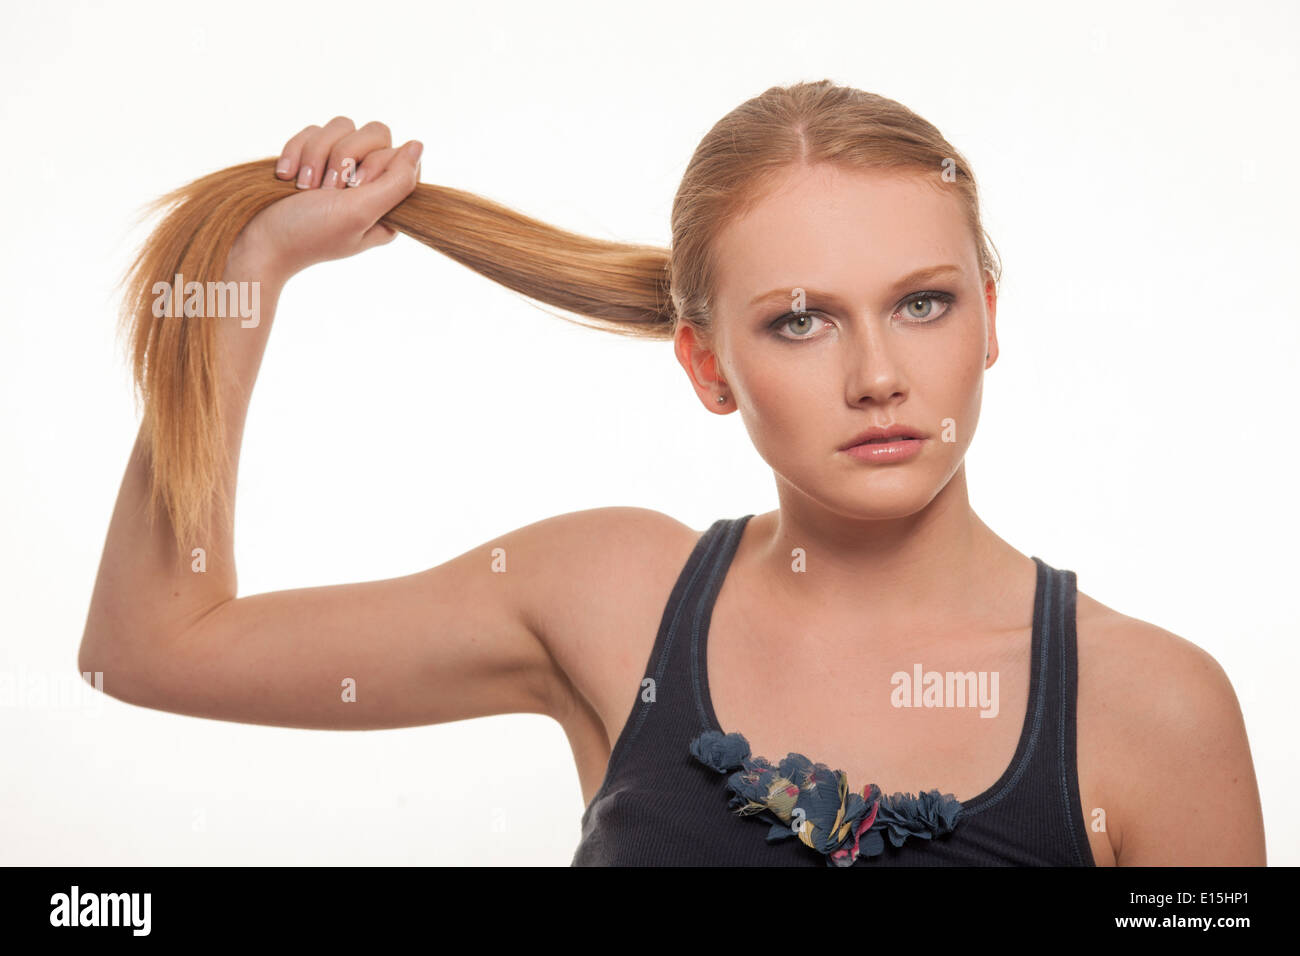 girl pulling her ponytail hair Stock Photo